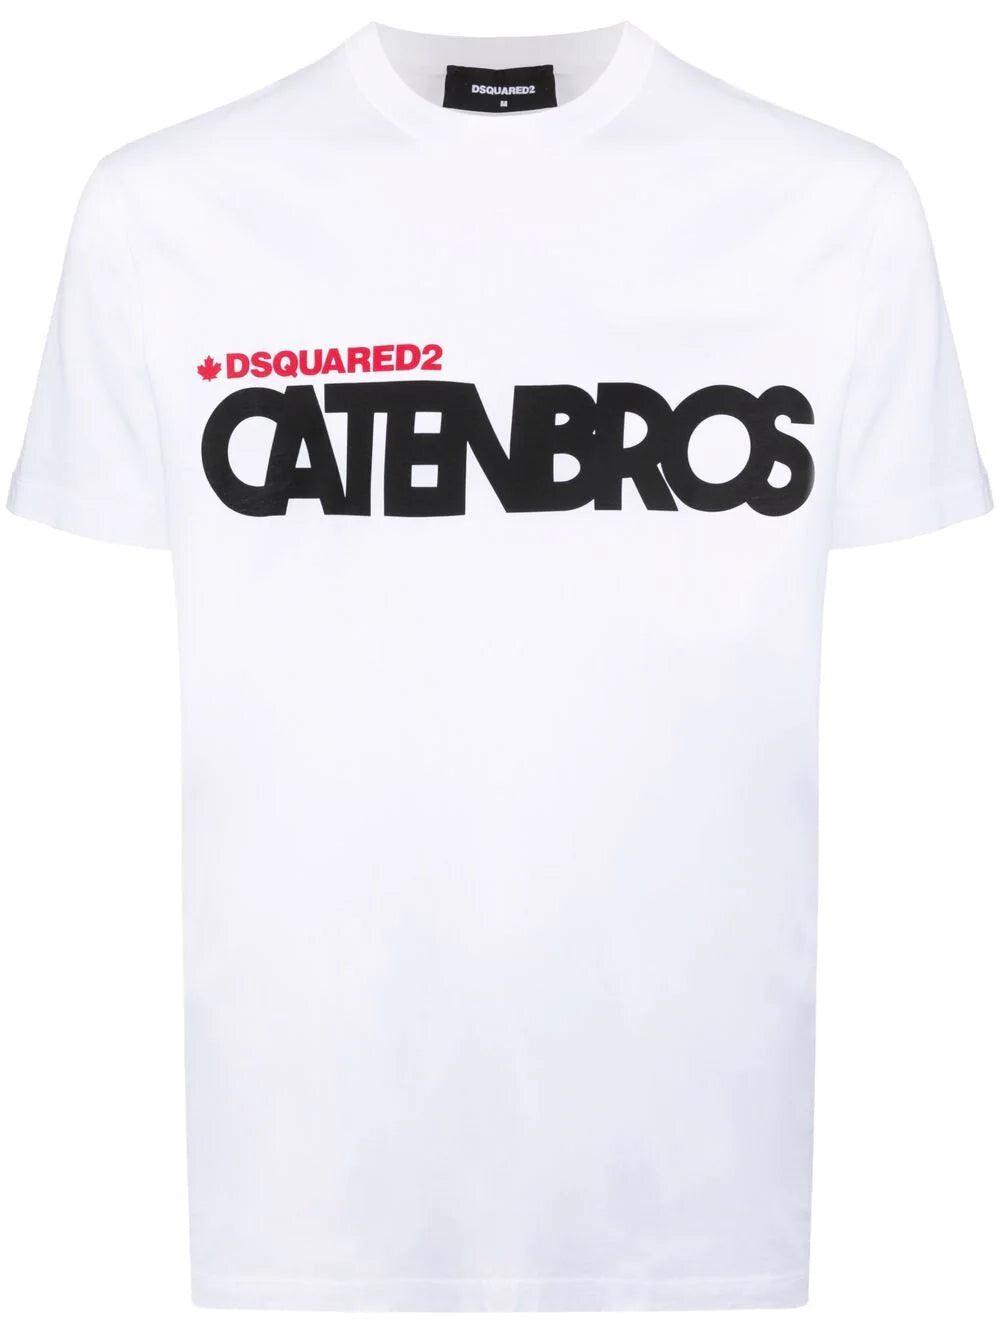 DSquared² Caten Bros Print T-shirt in White for Men | Lyst